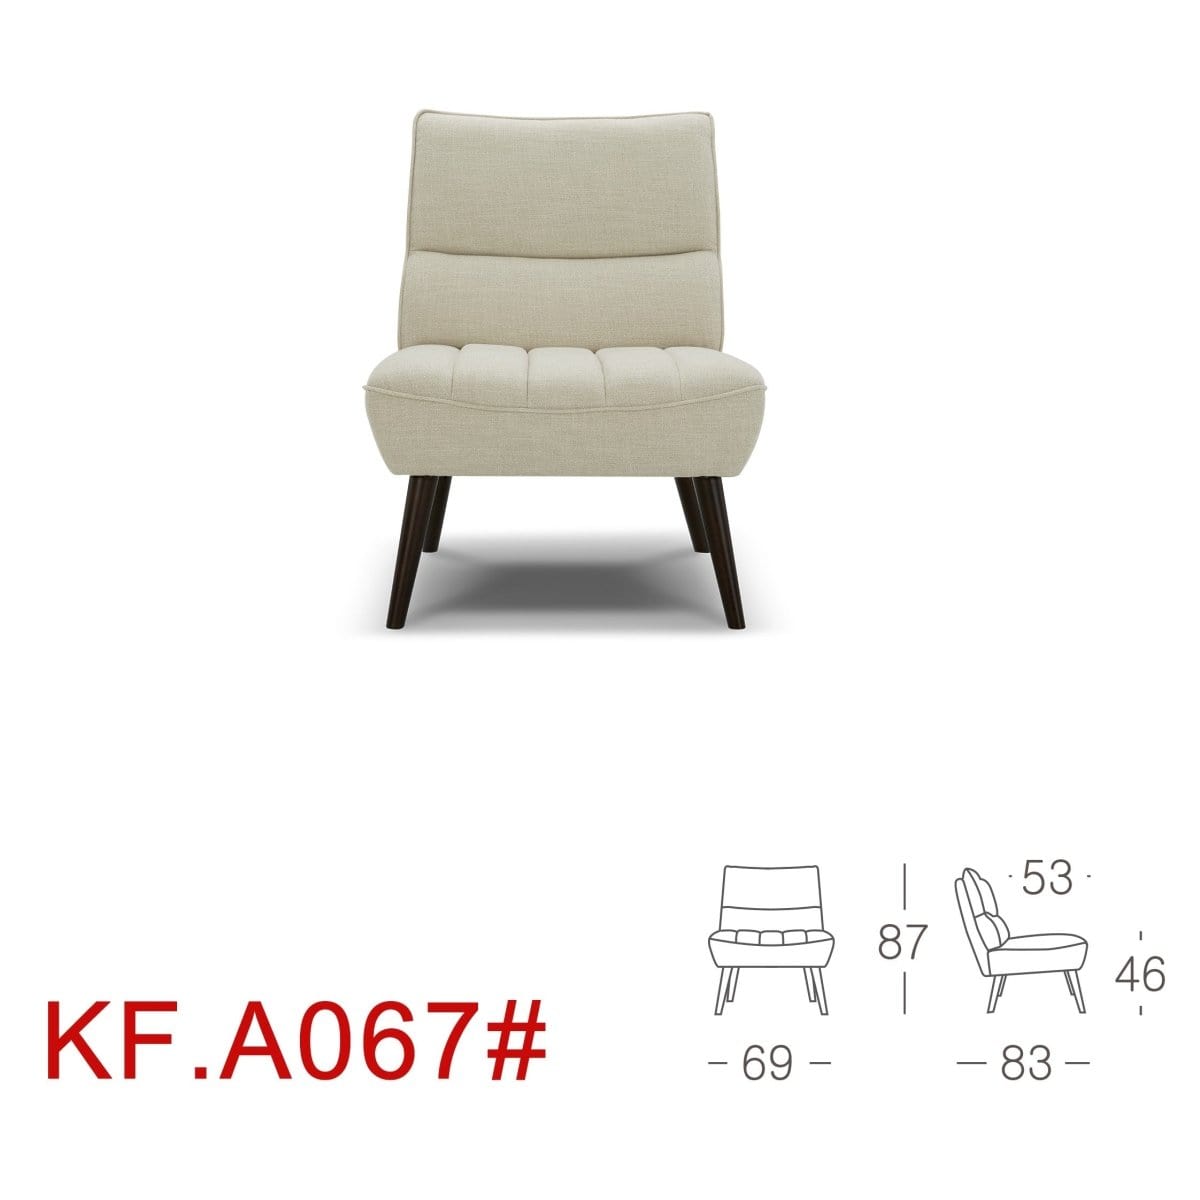 KUKA #KF.A067 Leather Lounge Chair (I) picket and rail